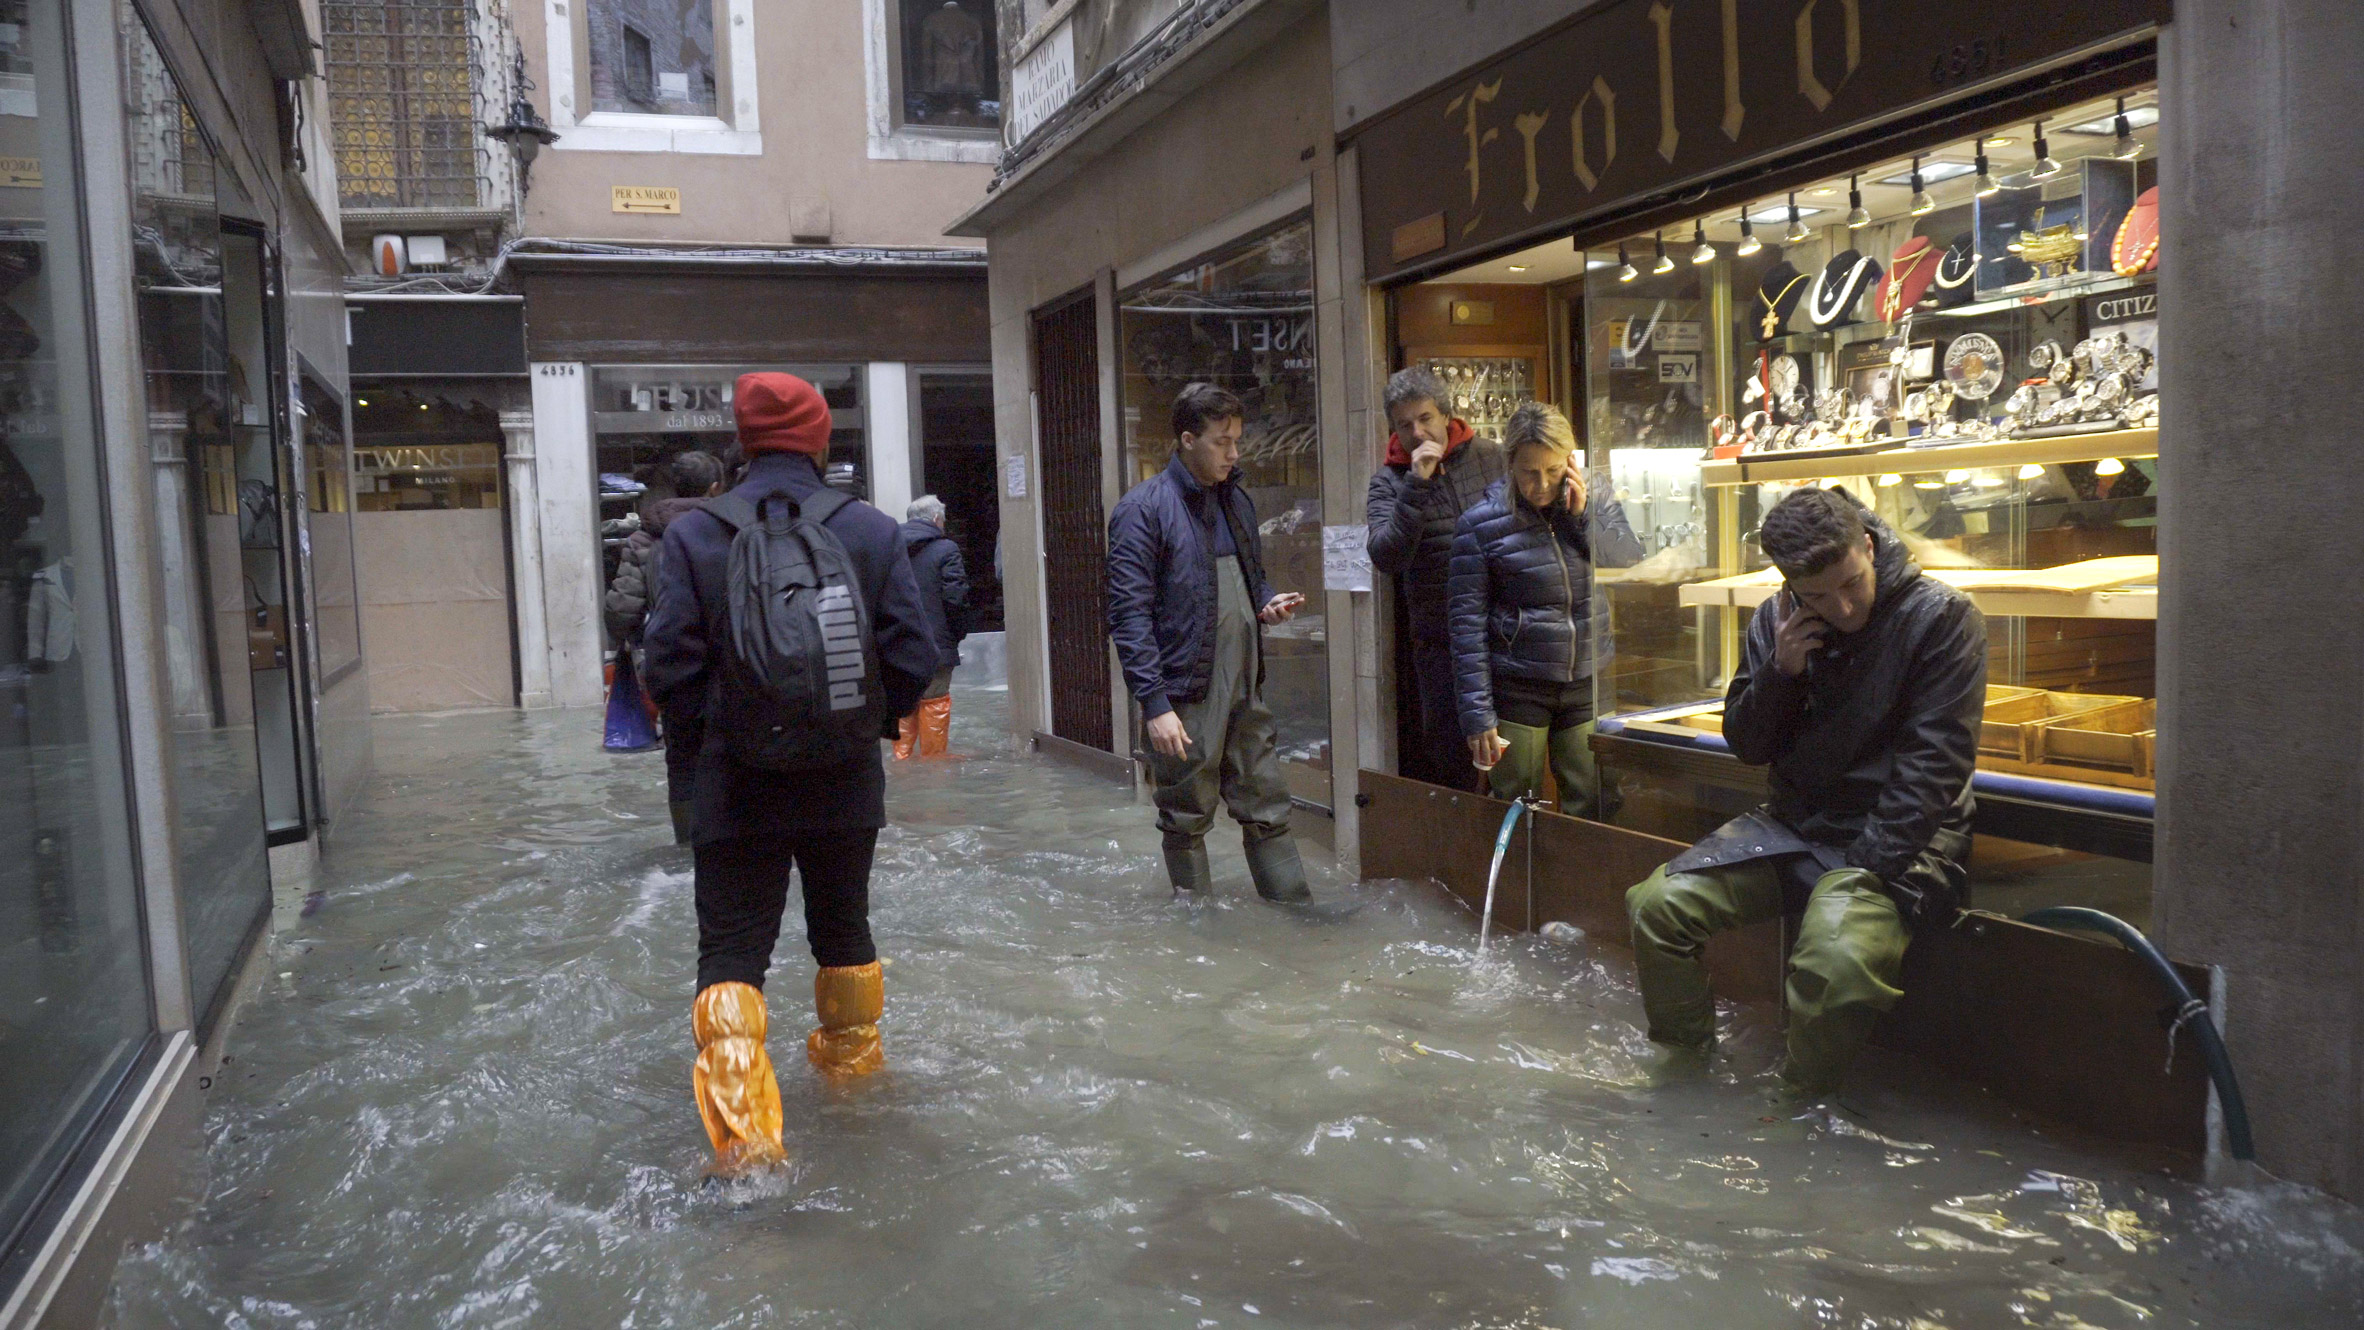 Homo Urbanus by Bêka & Lemoine shows Venice floods in shops